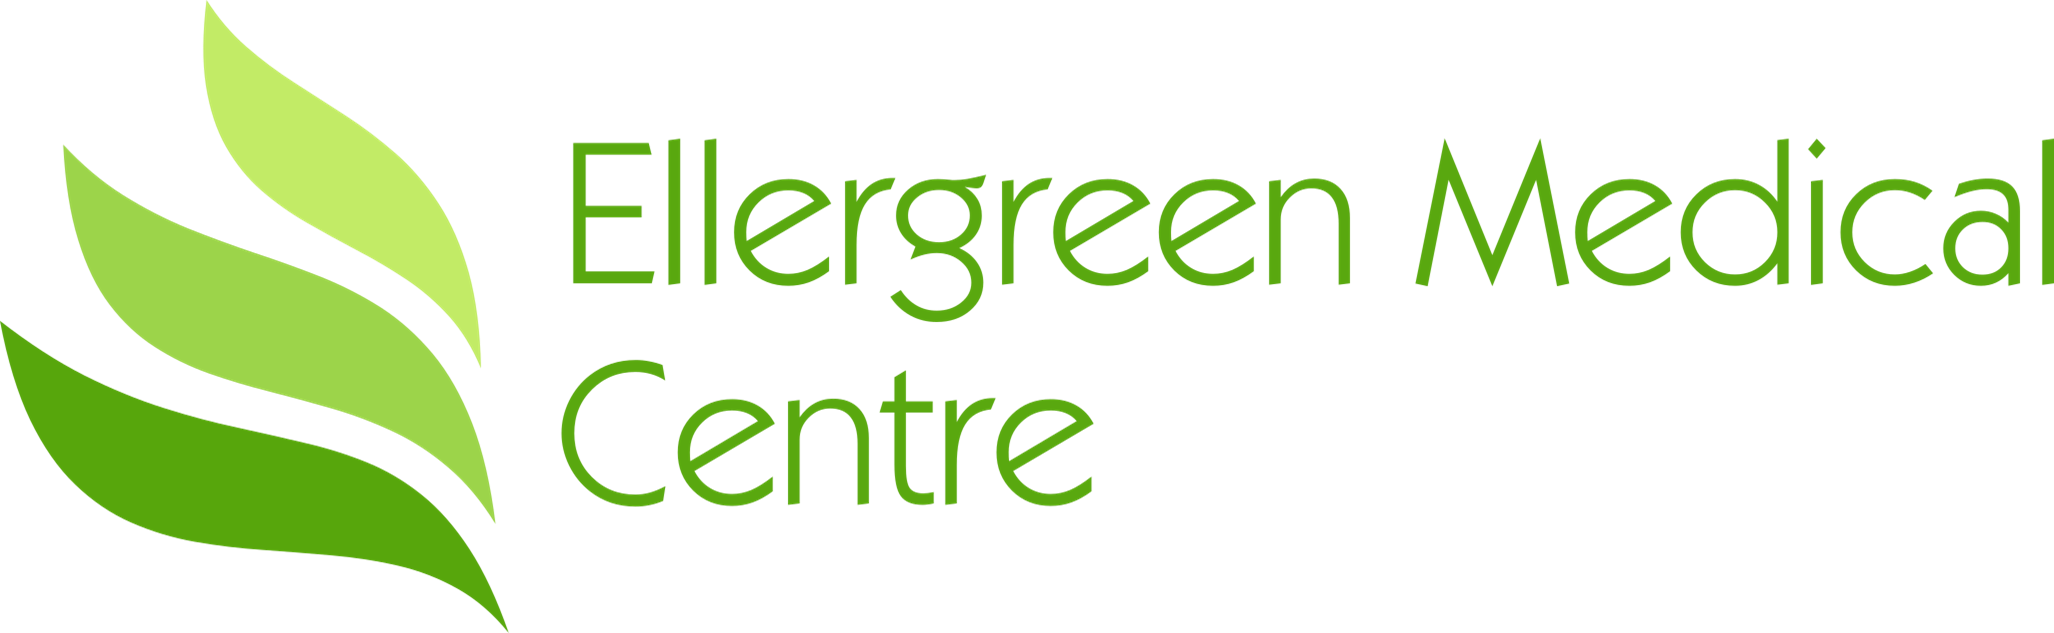 The logo for Ellergreen medical Centre